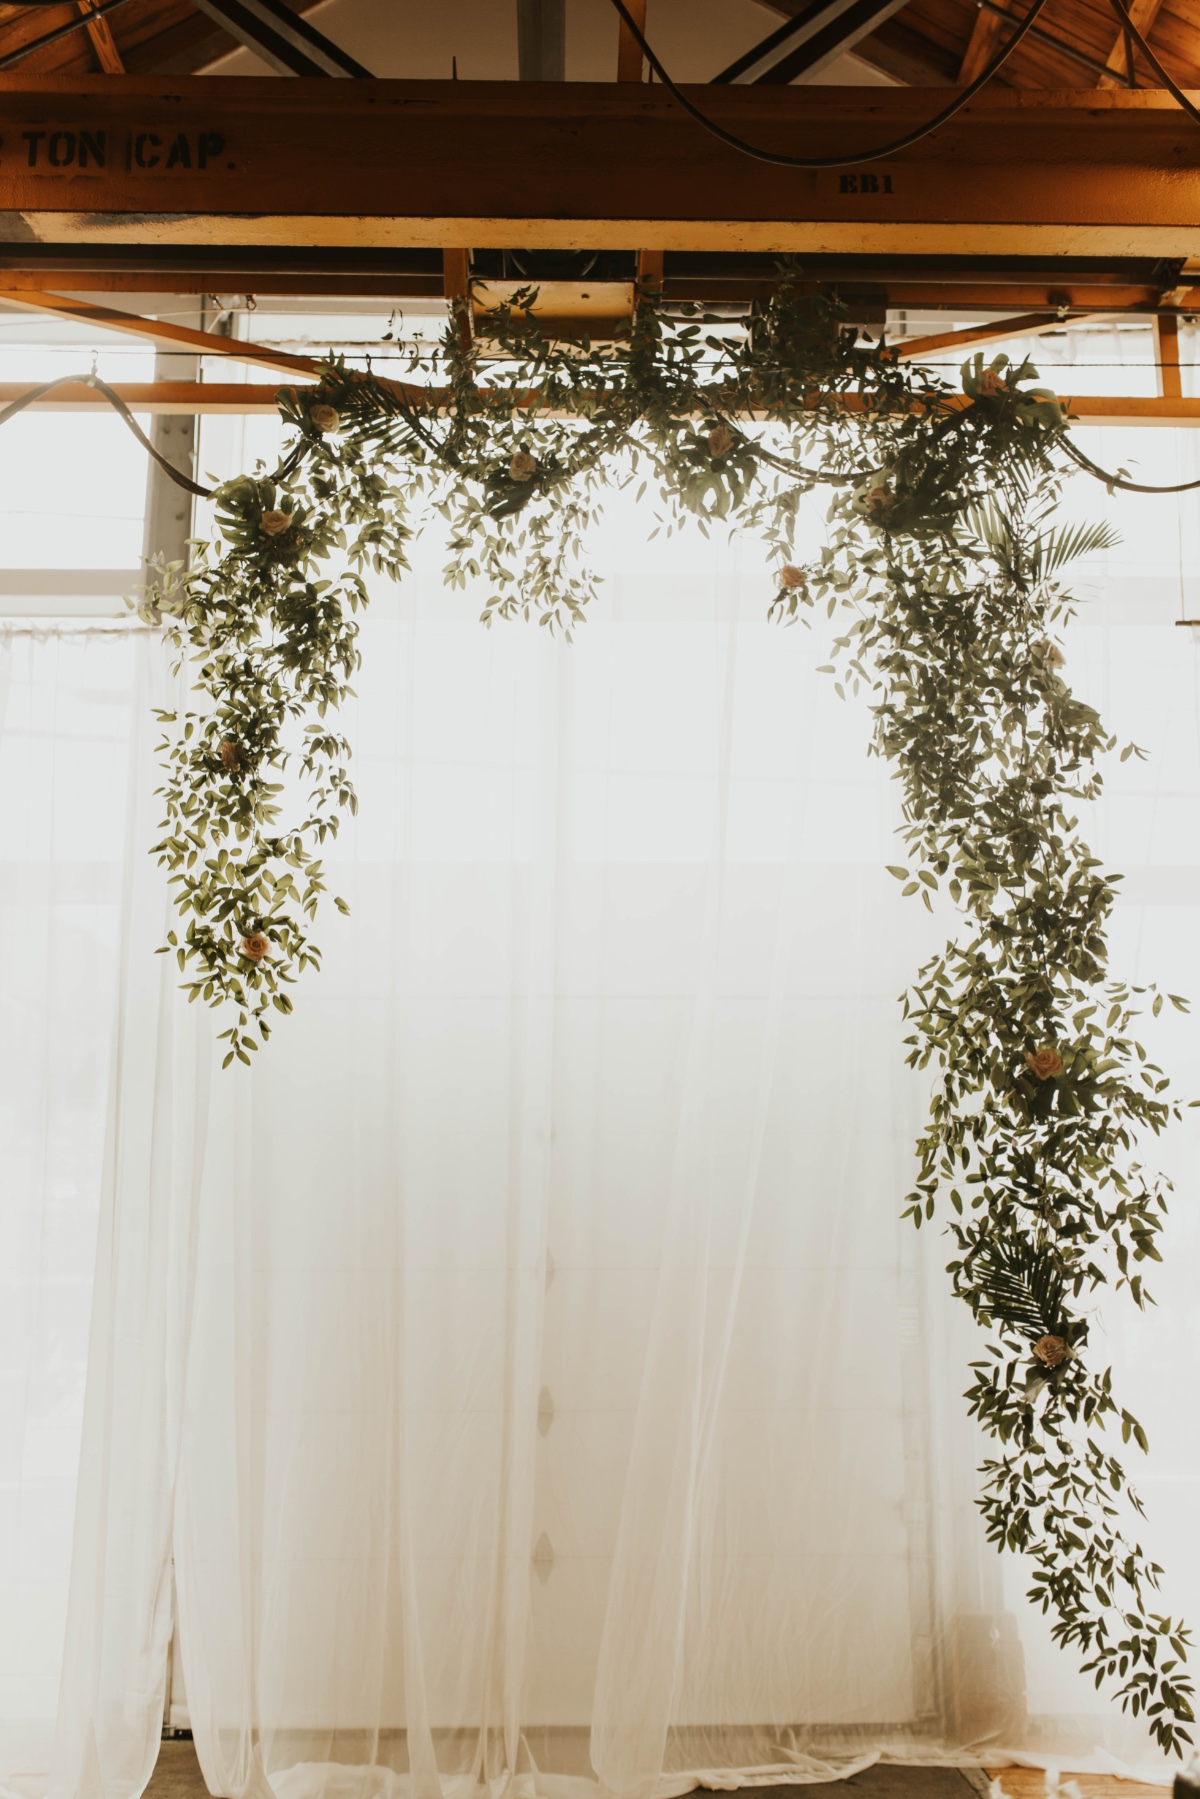 greenery hung for wedding backdrop